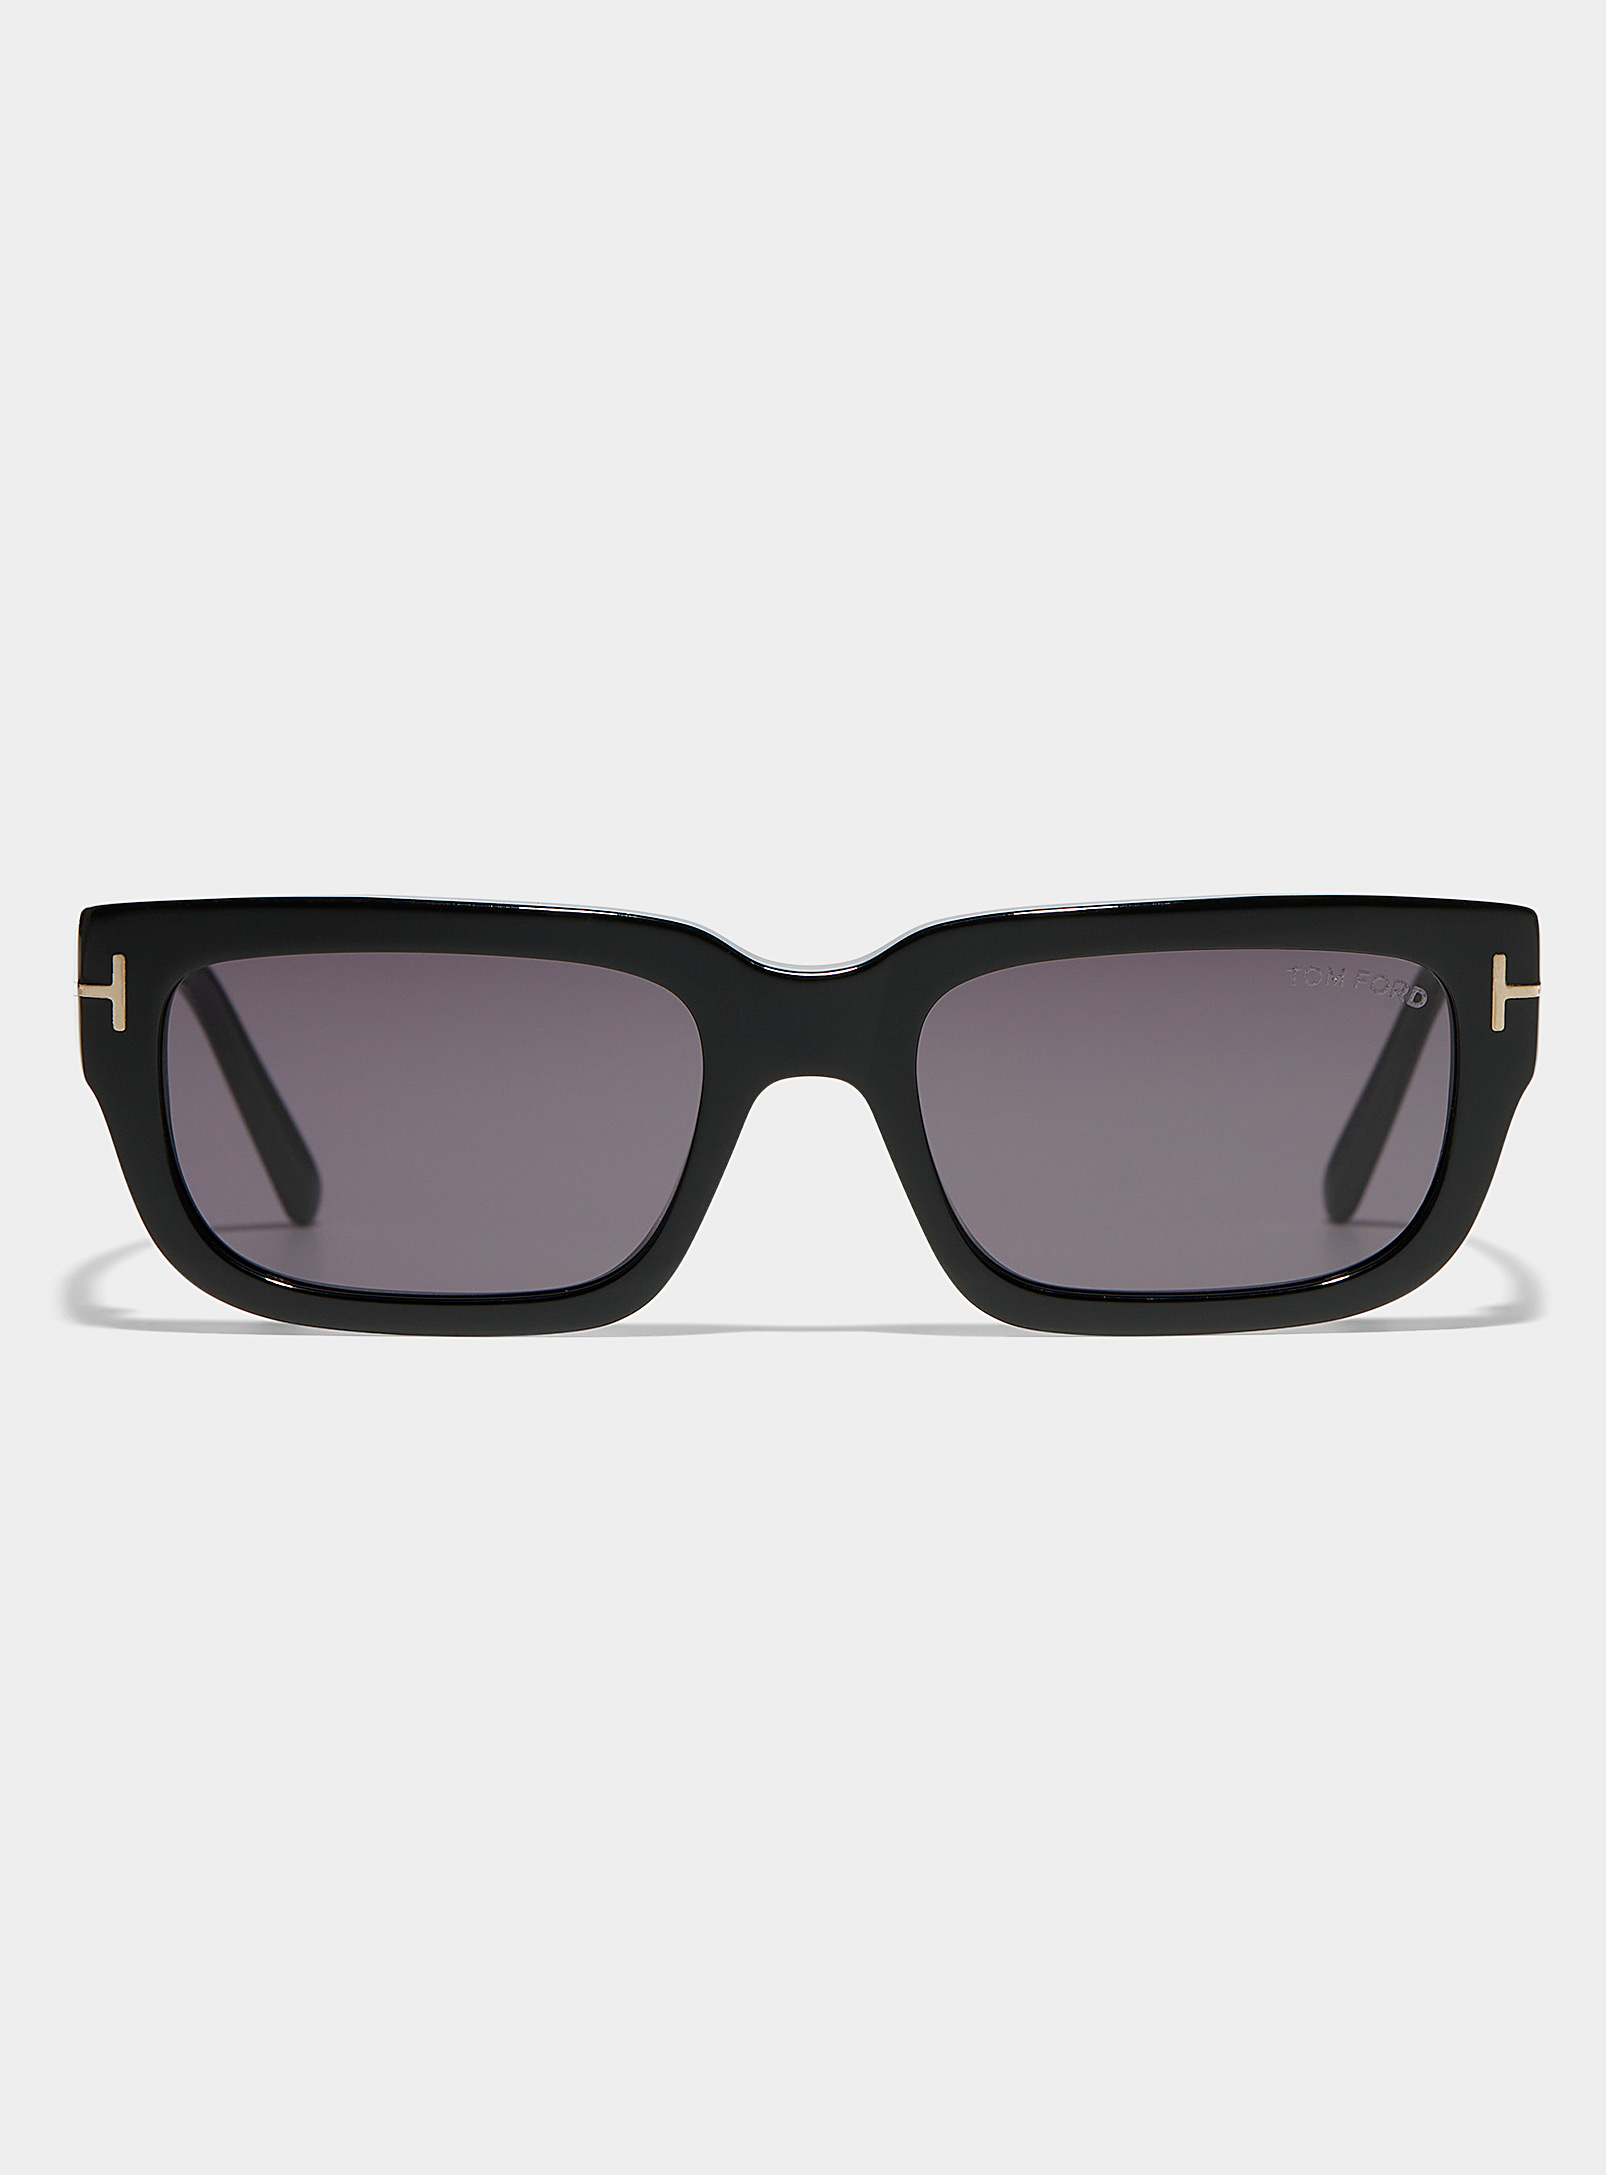 Tom Ford - Ezra rectangular sunglasses